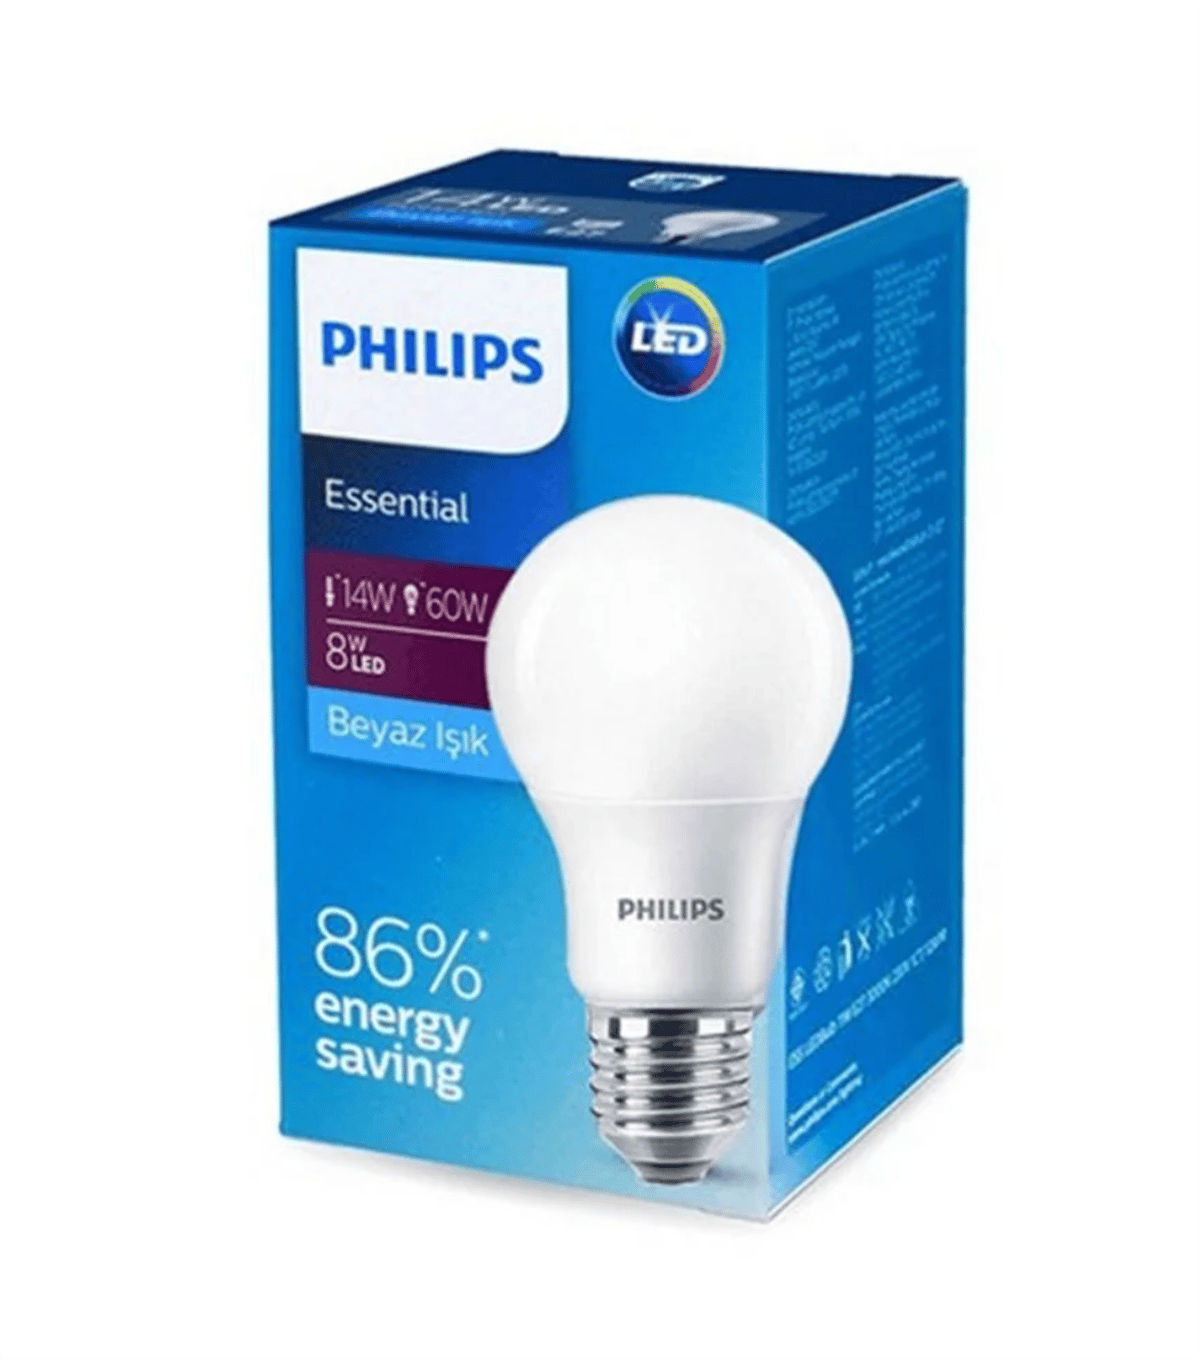 Philips Essential 8W E27 6500K Beyaz Işık LED Ampul